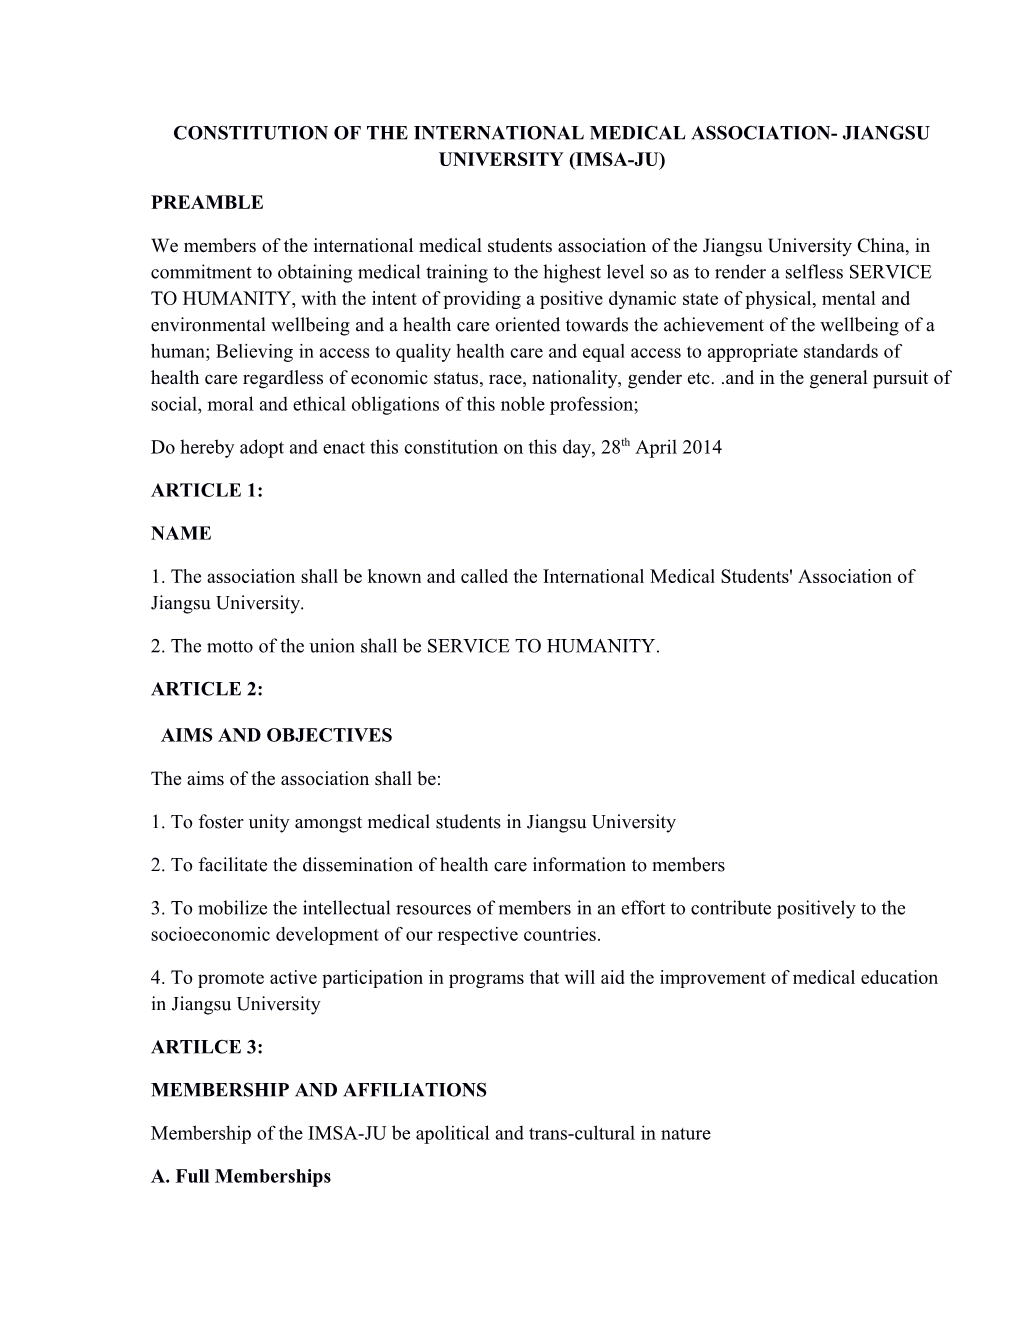 Constitution of the International Medical Association- Jiangsu University (Imsa-Ju)